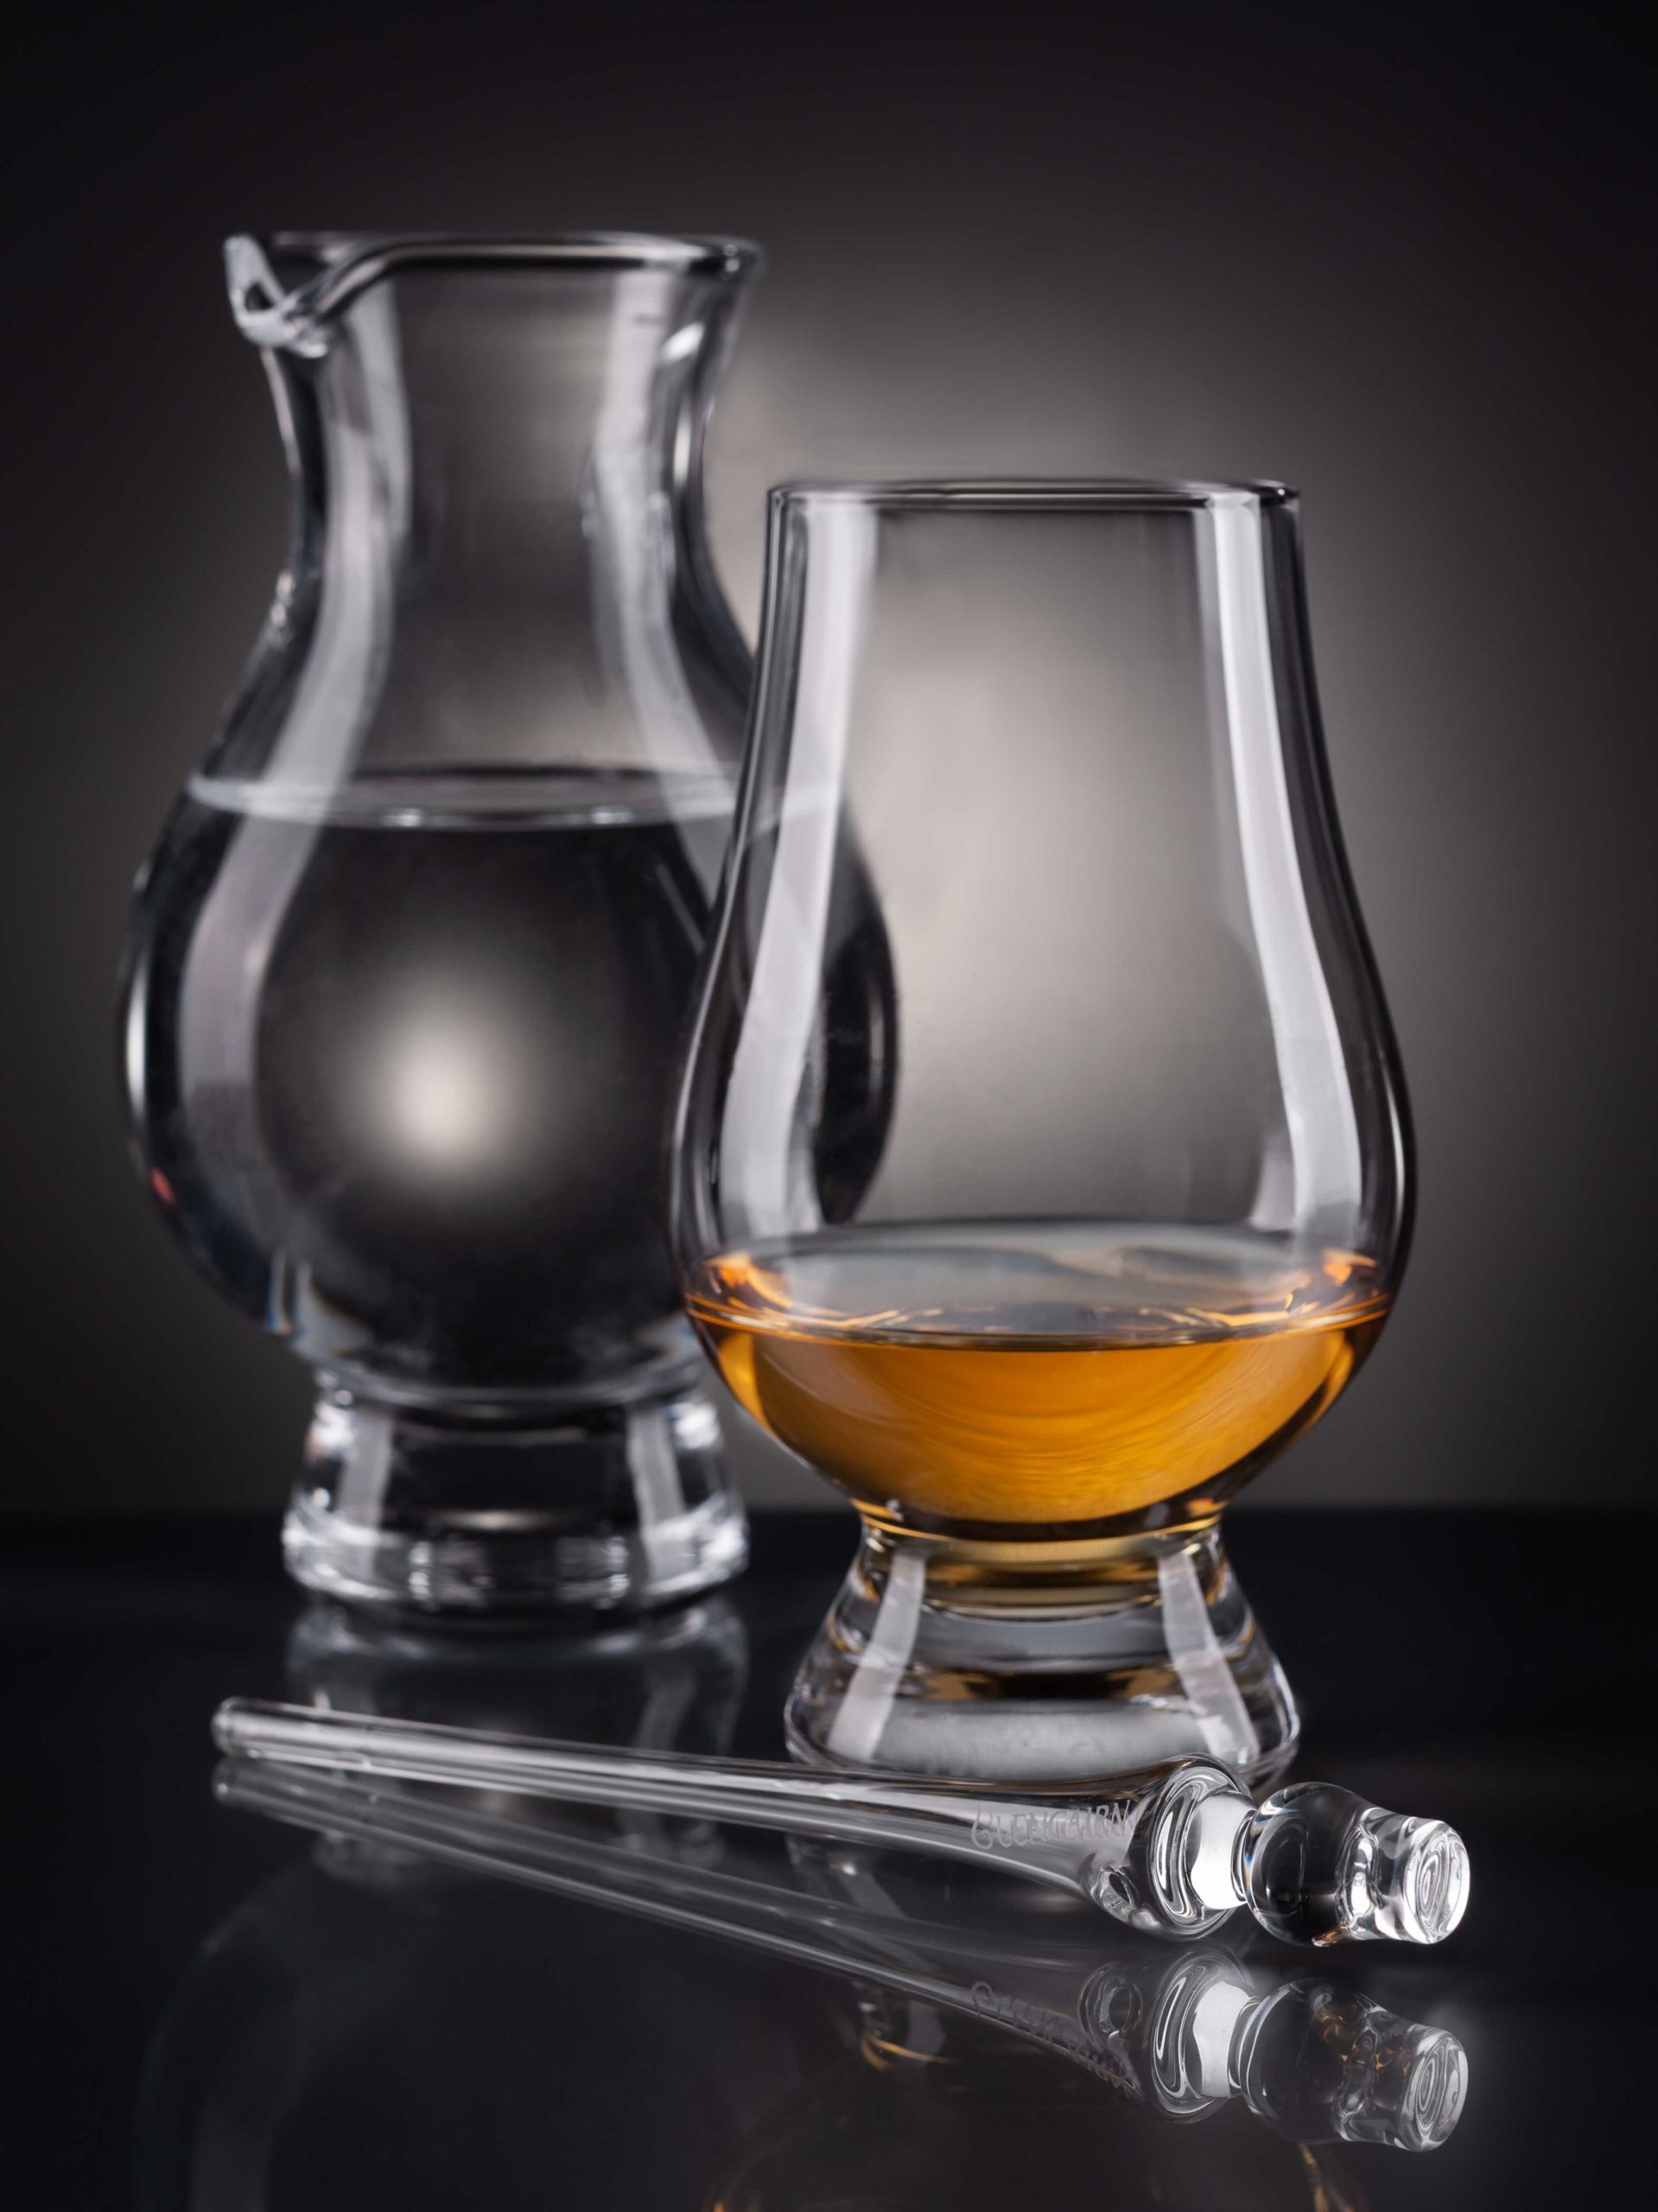 Official Whisky Tasting Glass Scotland Glencairn Whisky Glass "Water of Life" 